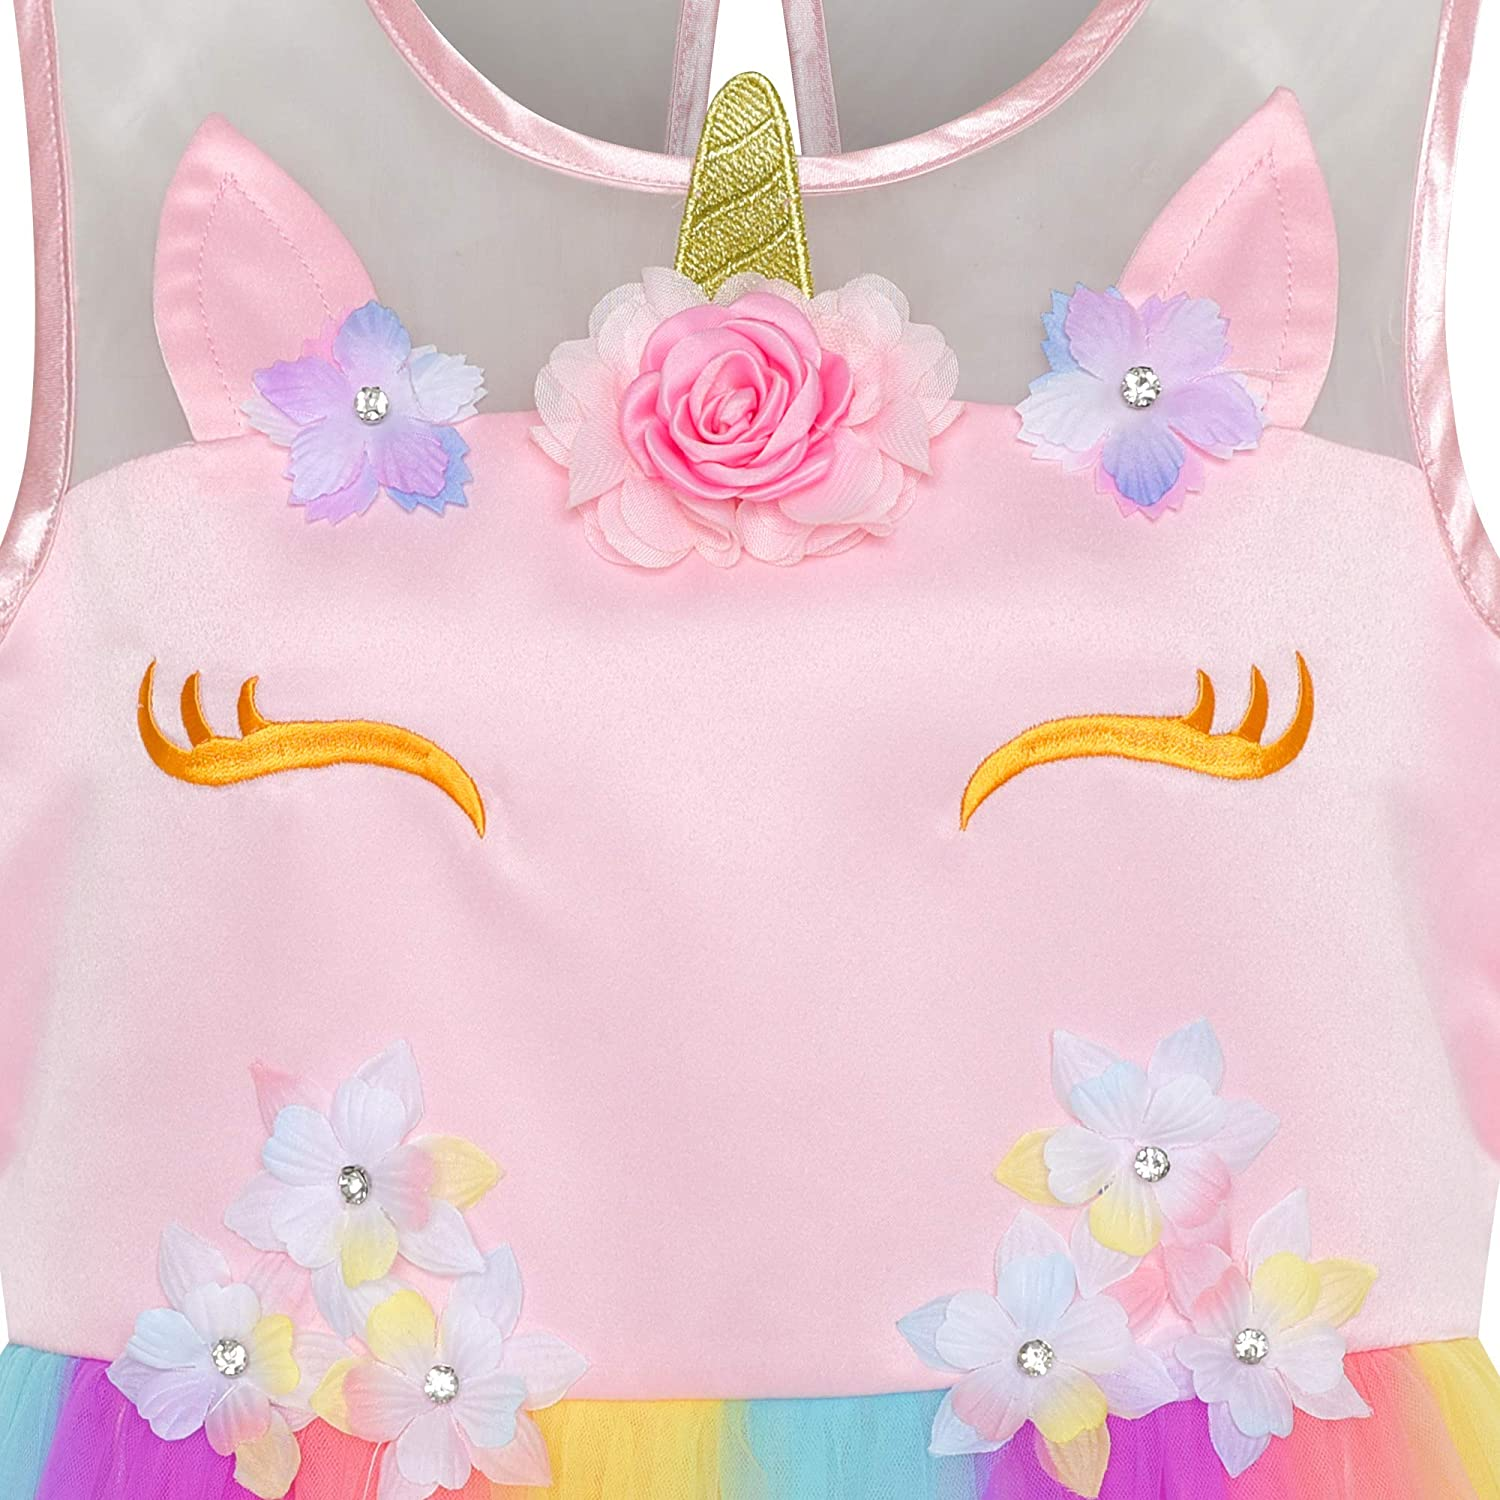 "Unicorn Rainbow Pageant Princess Party Dress for Girls"